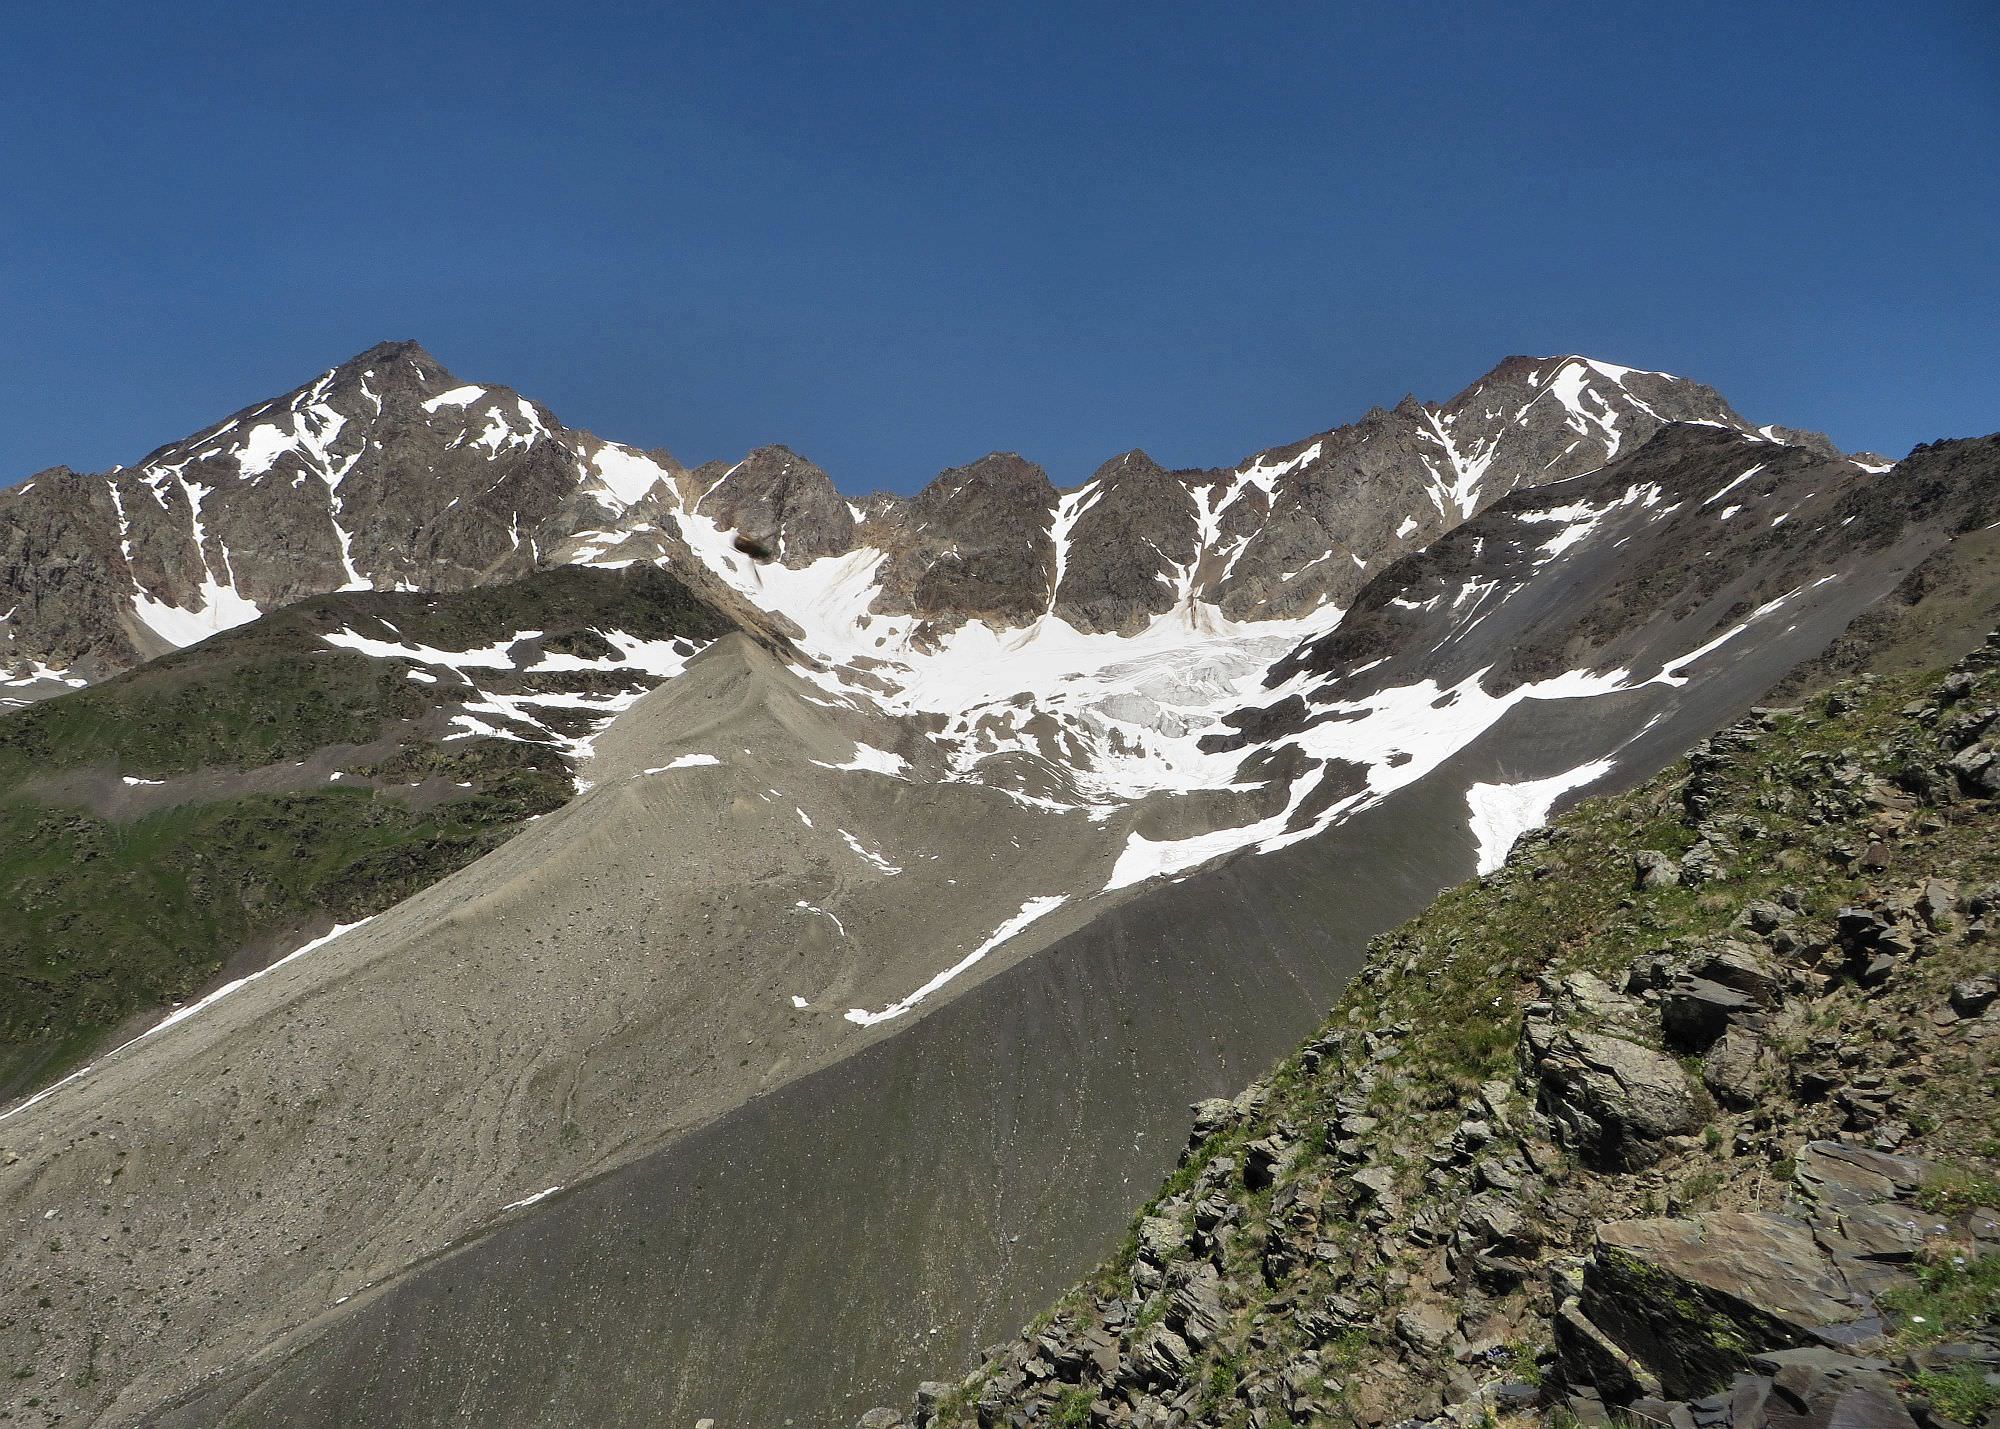 Mt. Banguriani to the left, Mt. Ahalgazrdoba (Pik Komsomol) to the right